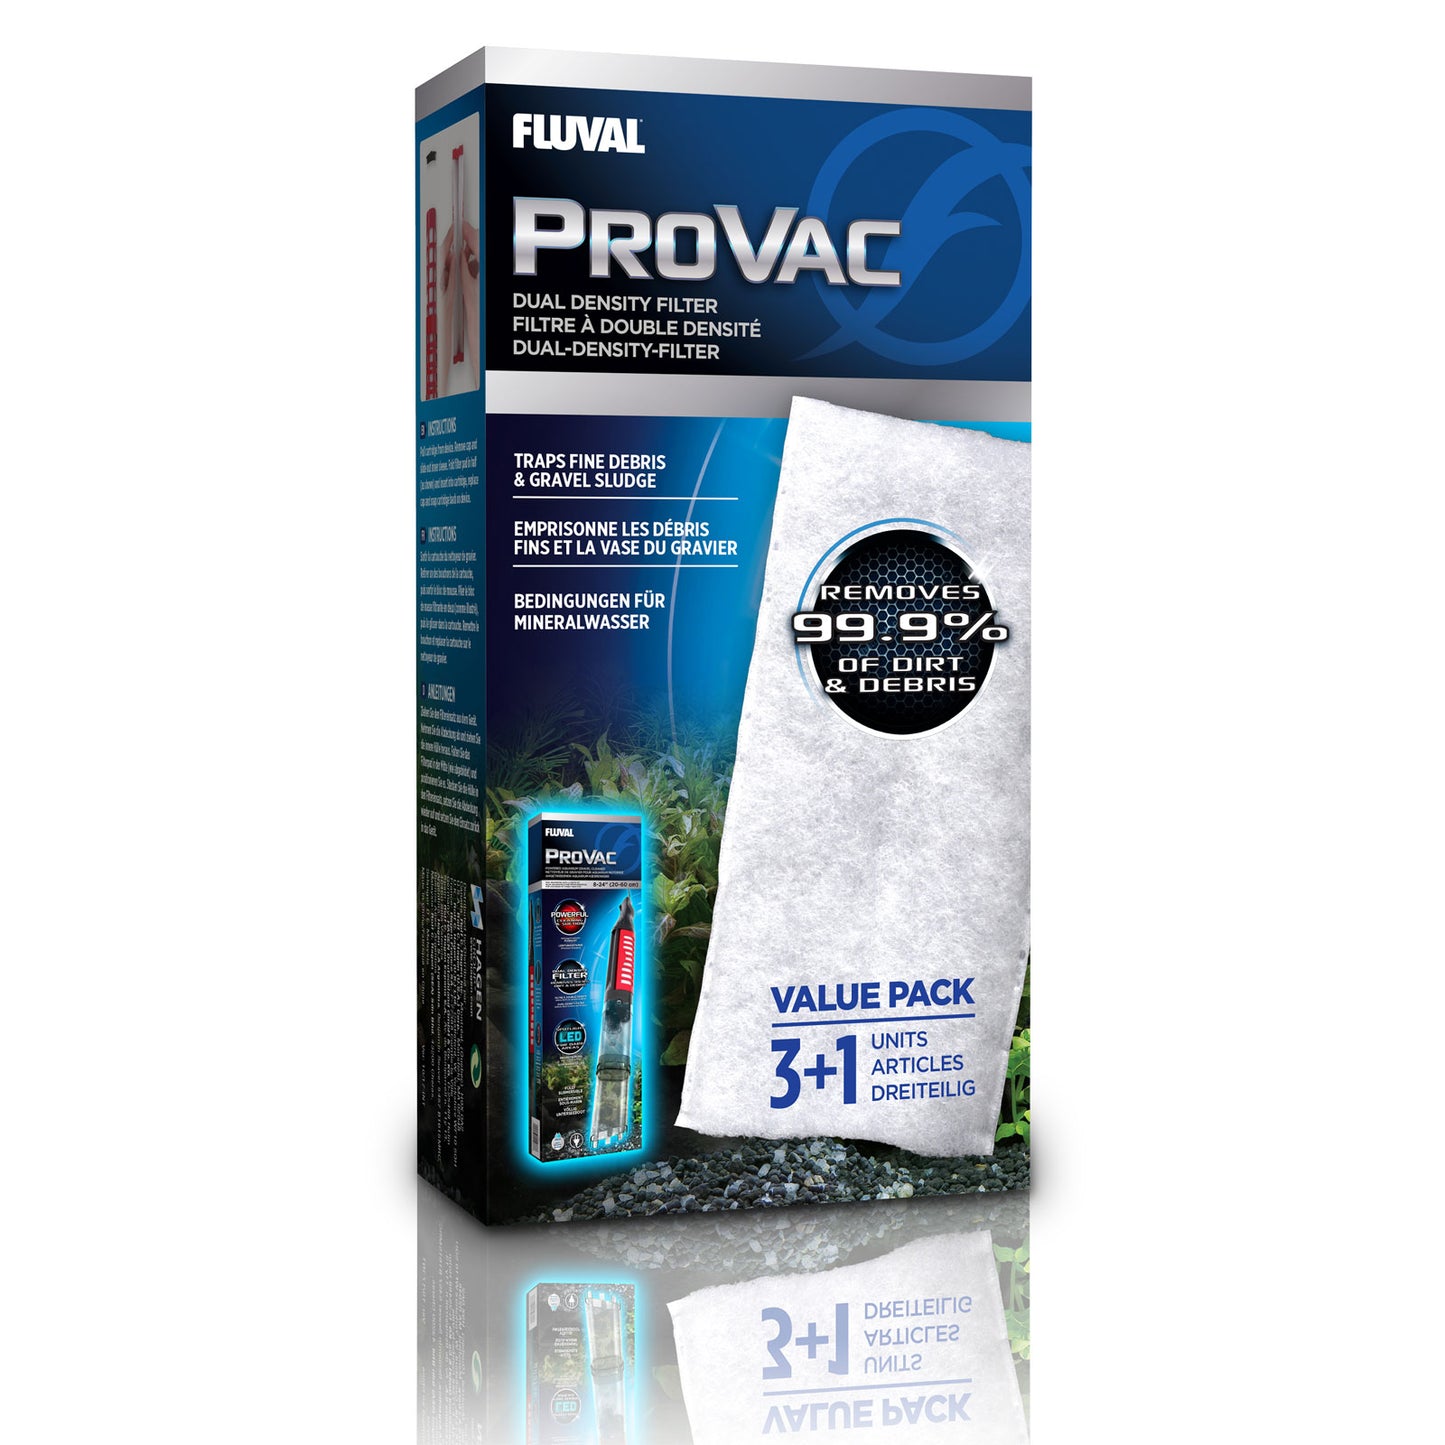 Fluval Provac dual density filter pad